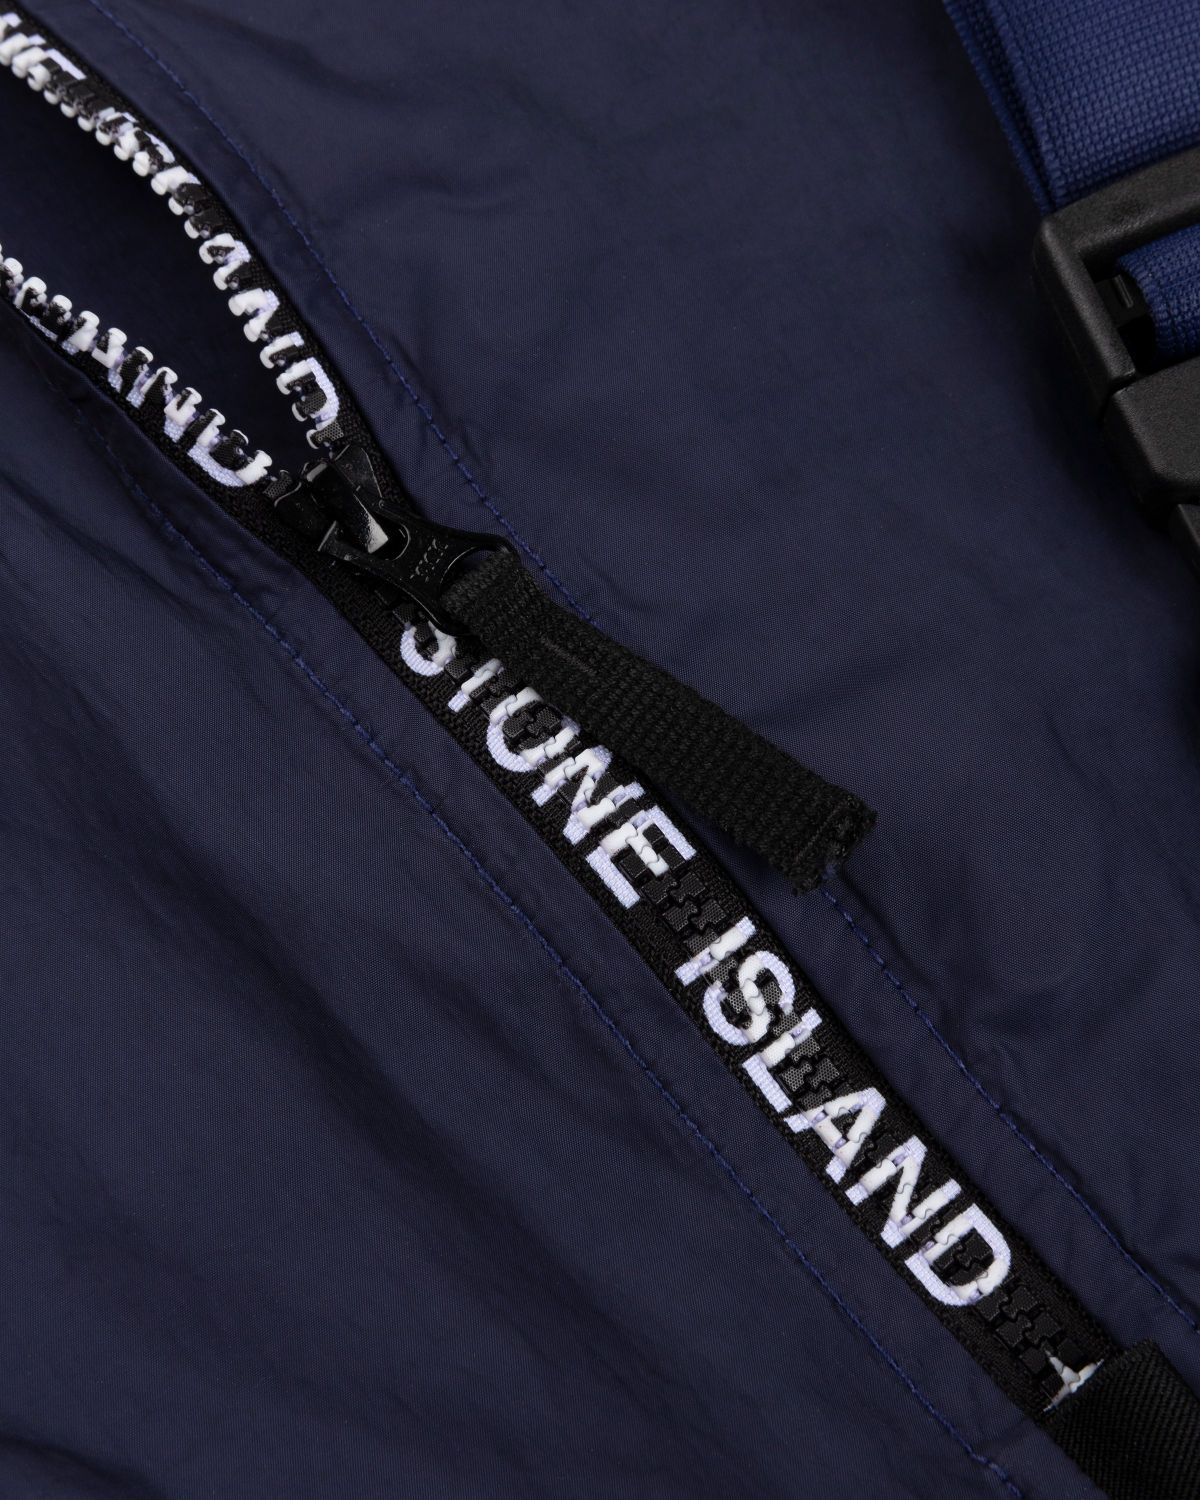 Stone Island – 93466 Logo Beach Towel With Nylon Bag Royal - Towels - Blue - Image 6